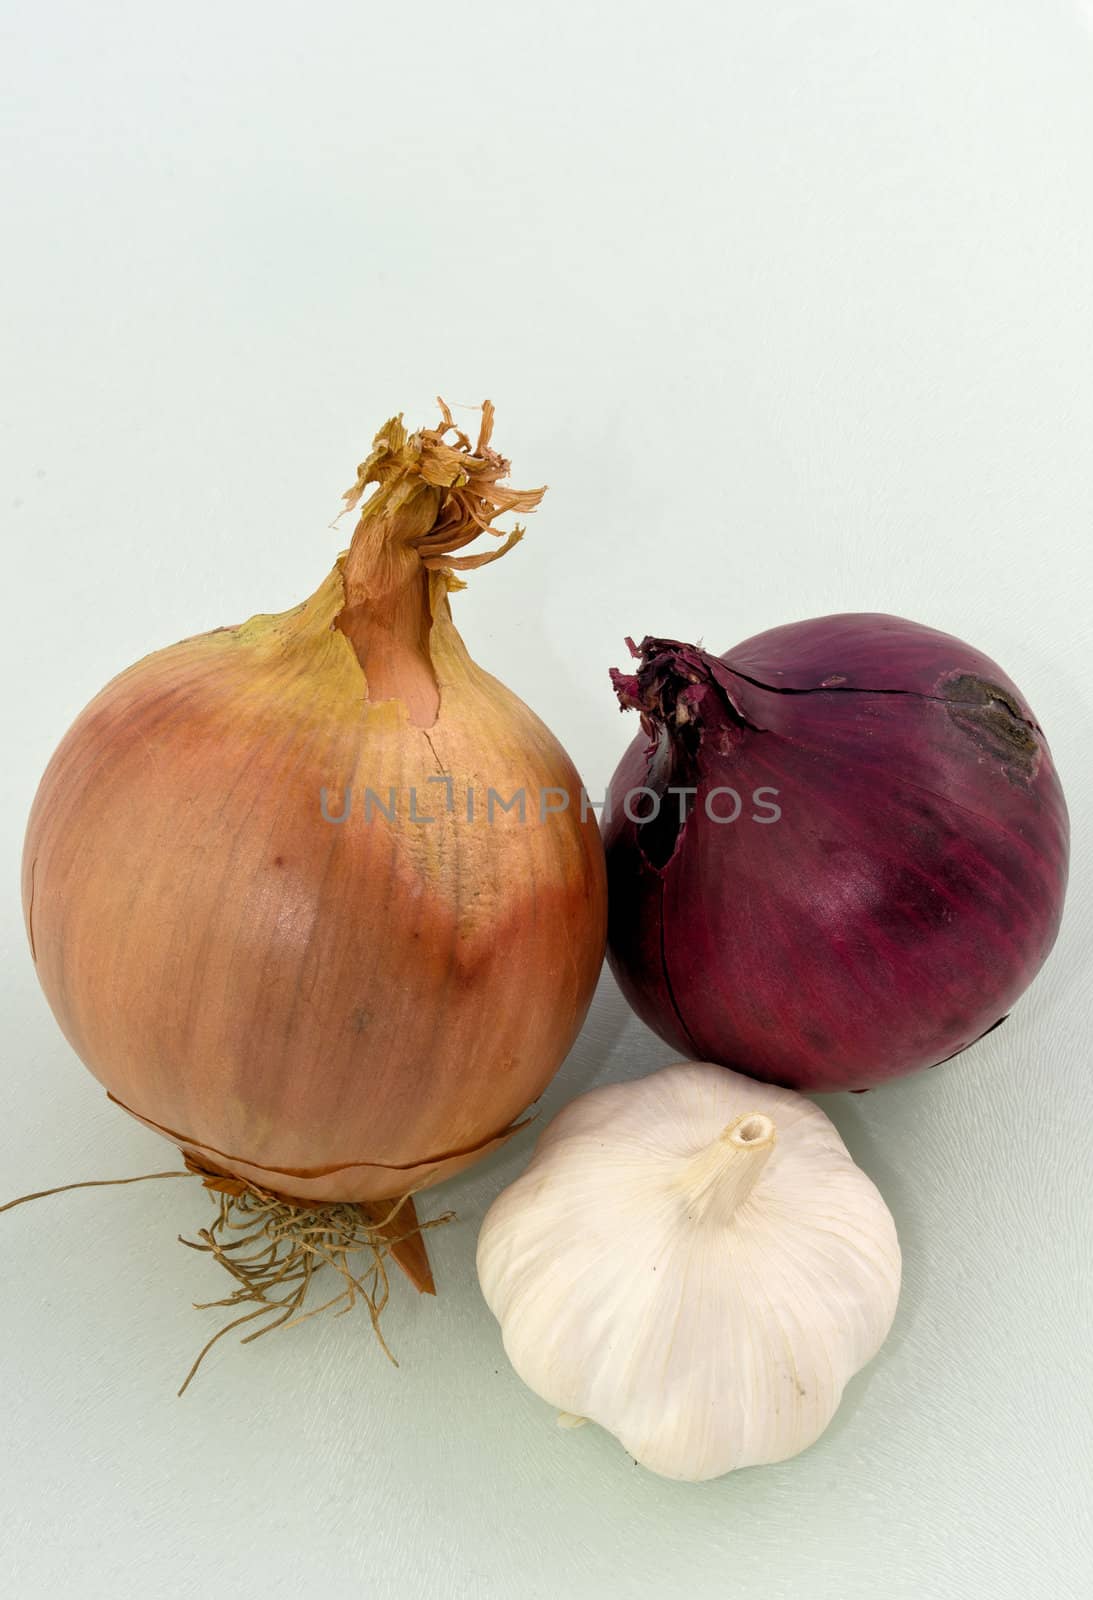 Onion and Garlic by Jez22